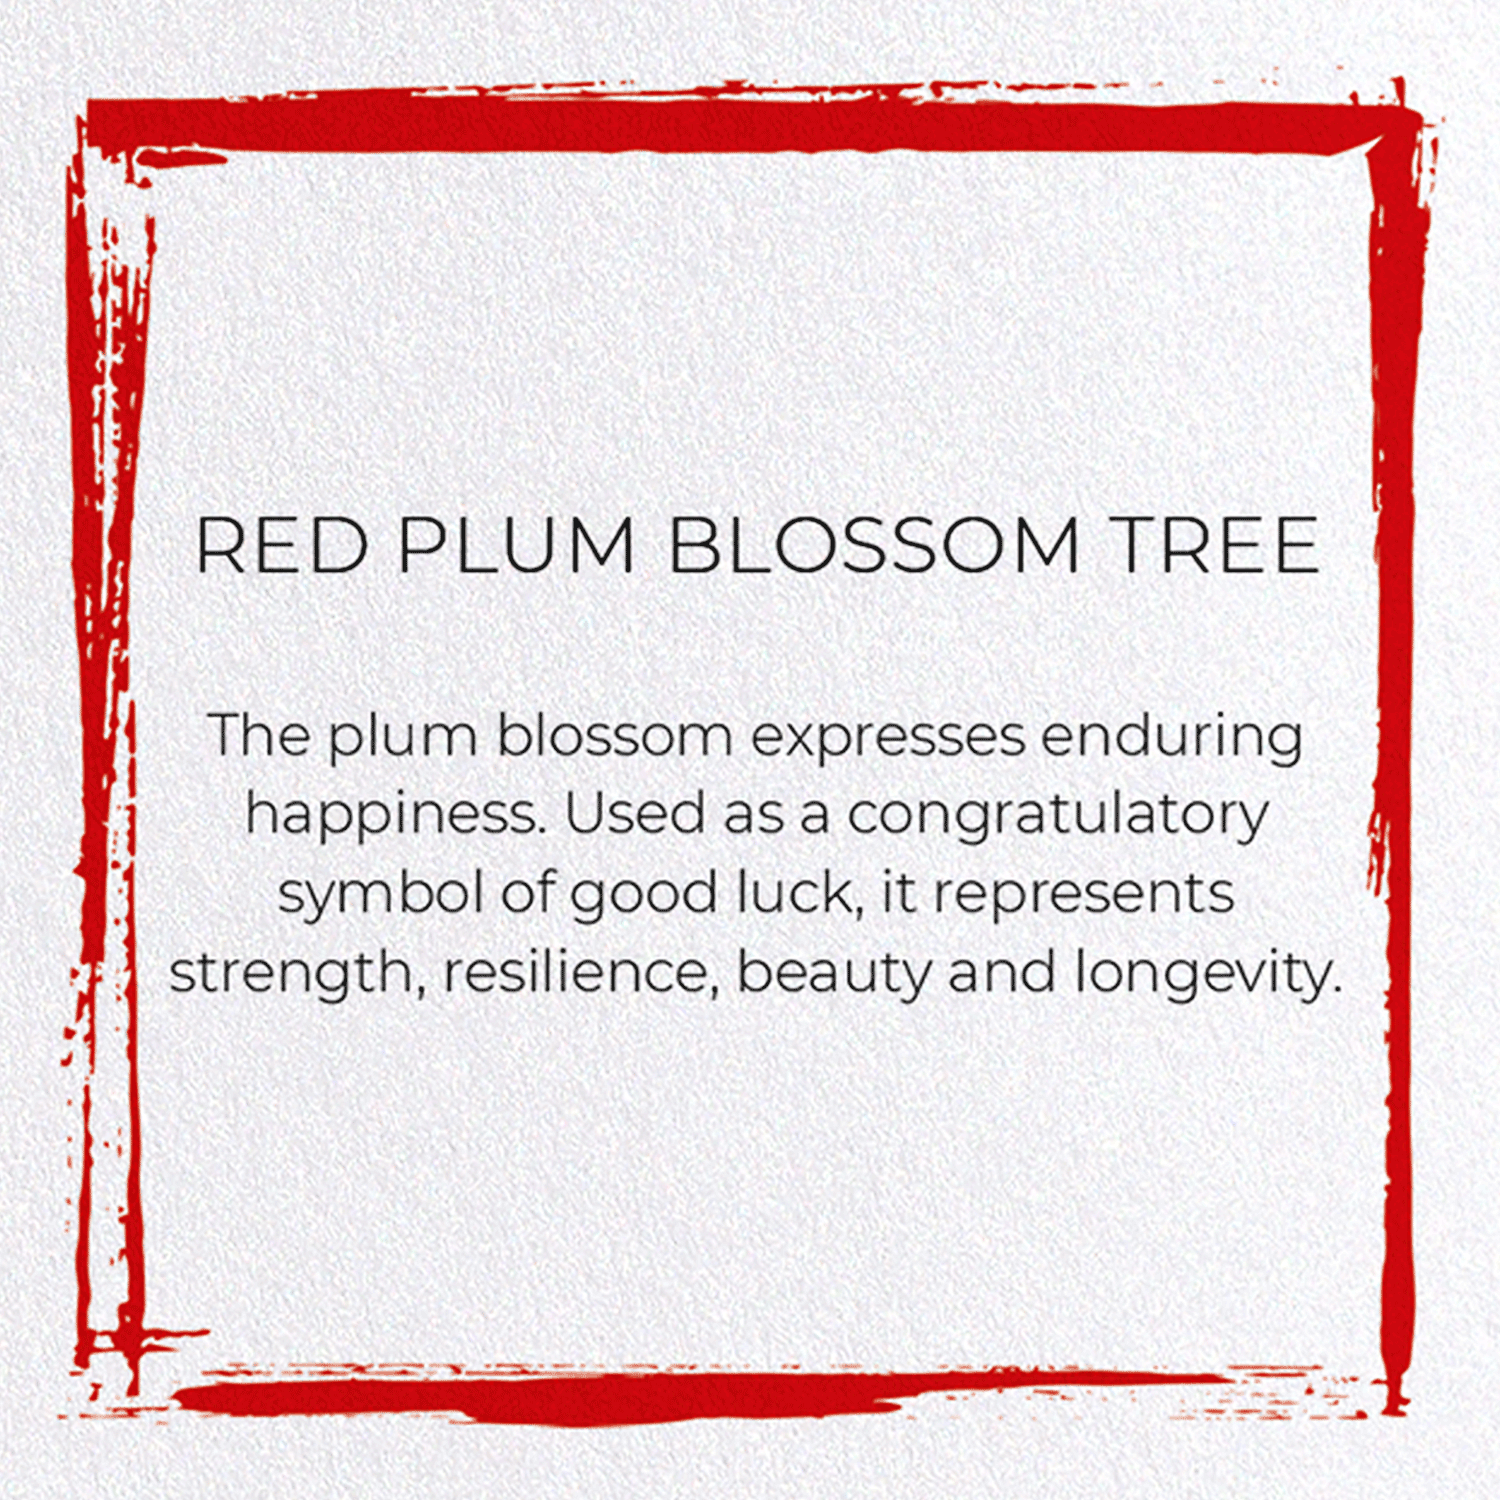 RED PLUM BLOSSOM TREE